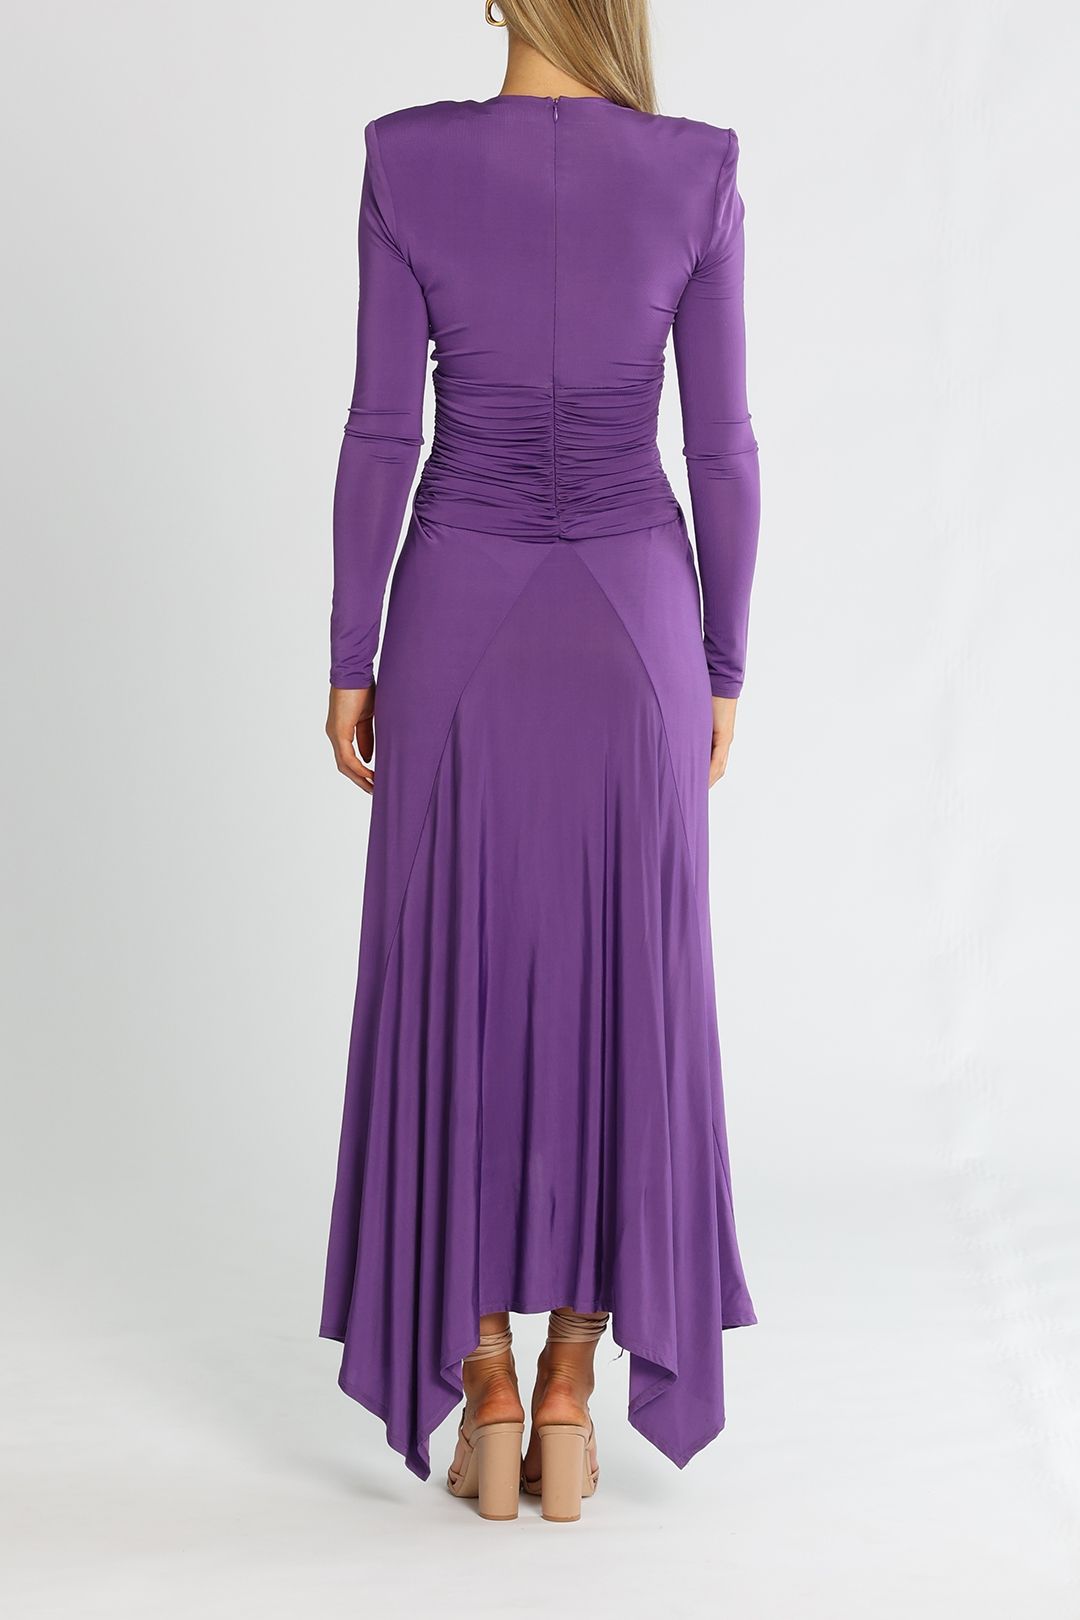 Ronny Kobo Stormy Dress Purple Ruch